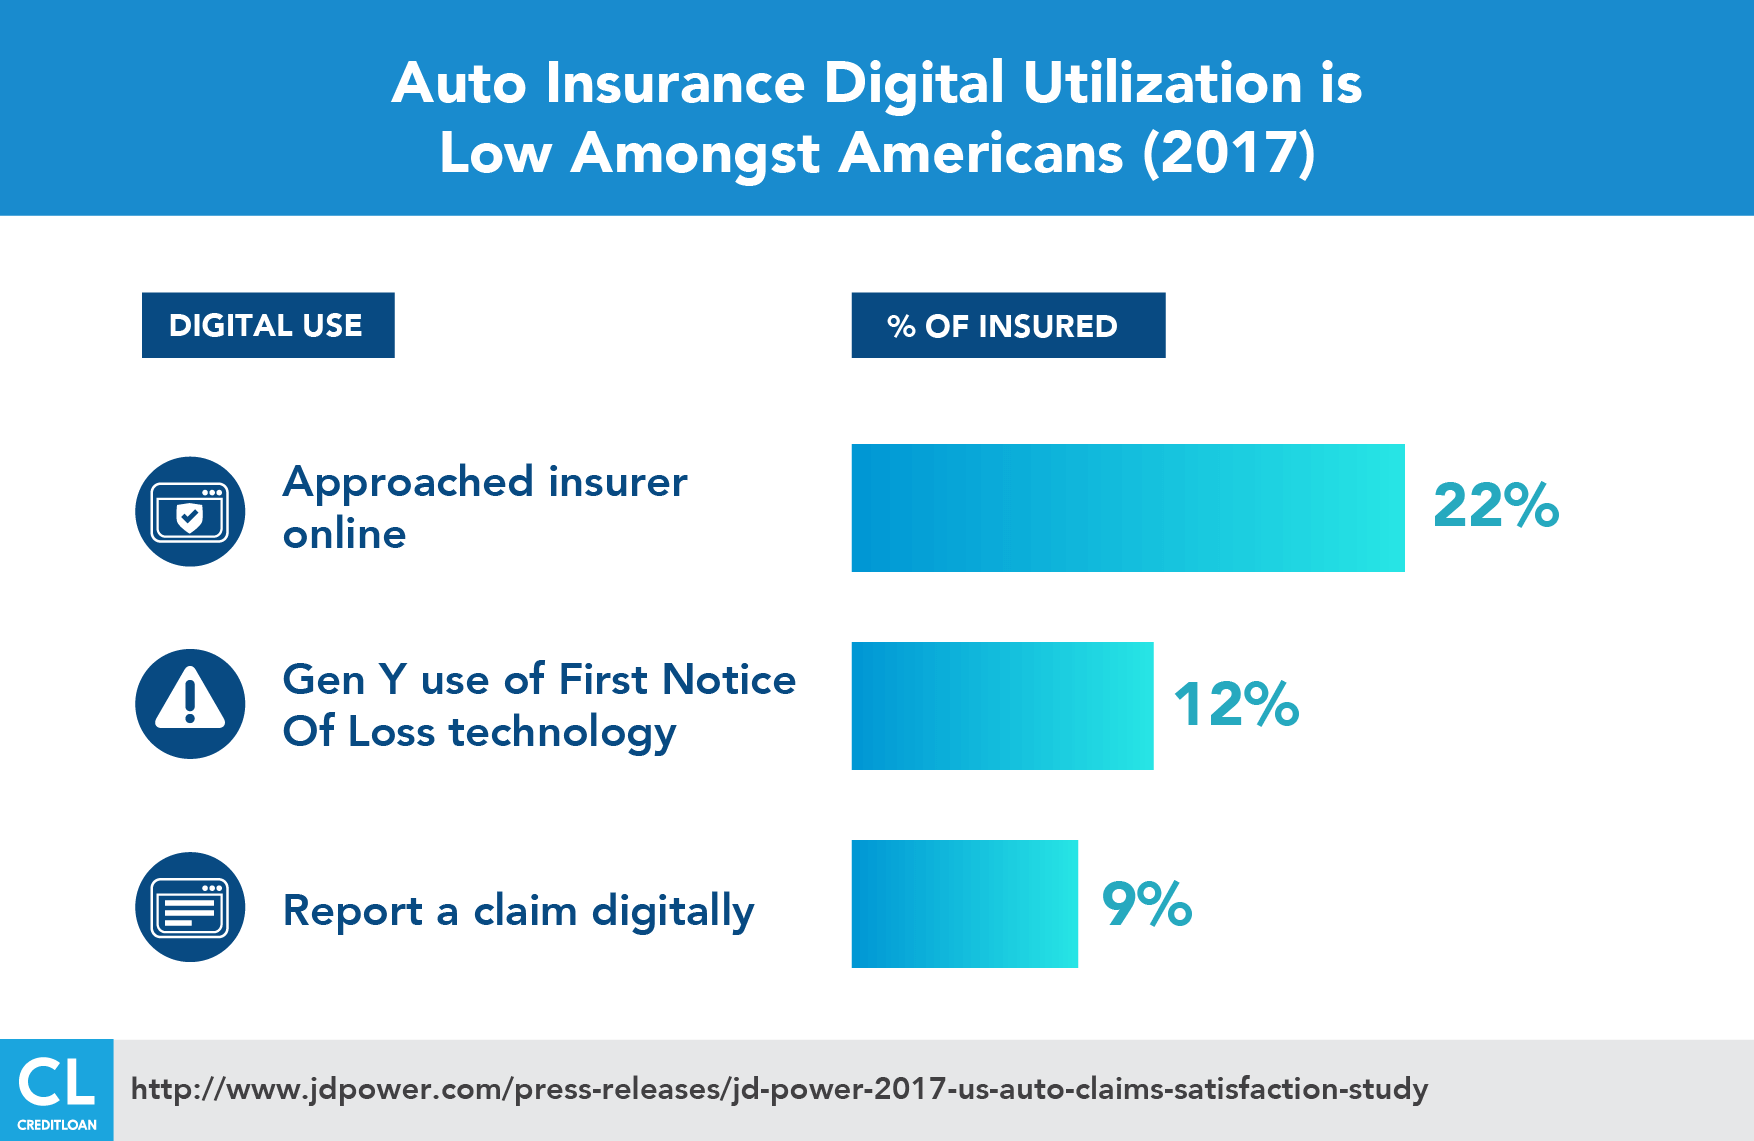 Auto Insurance Digital Utilization is Low Amongst Americans